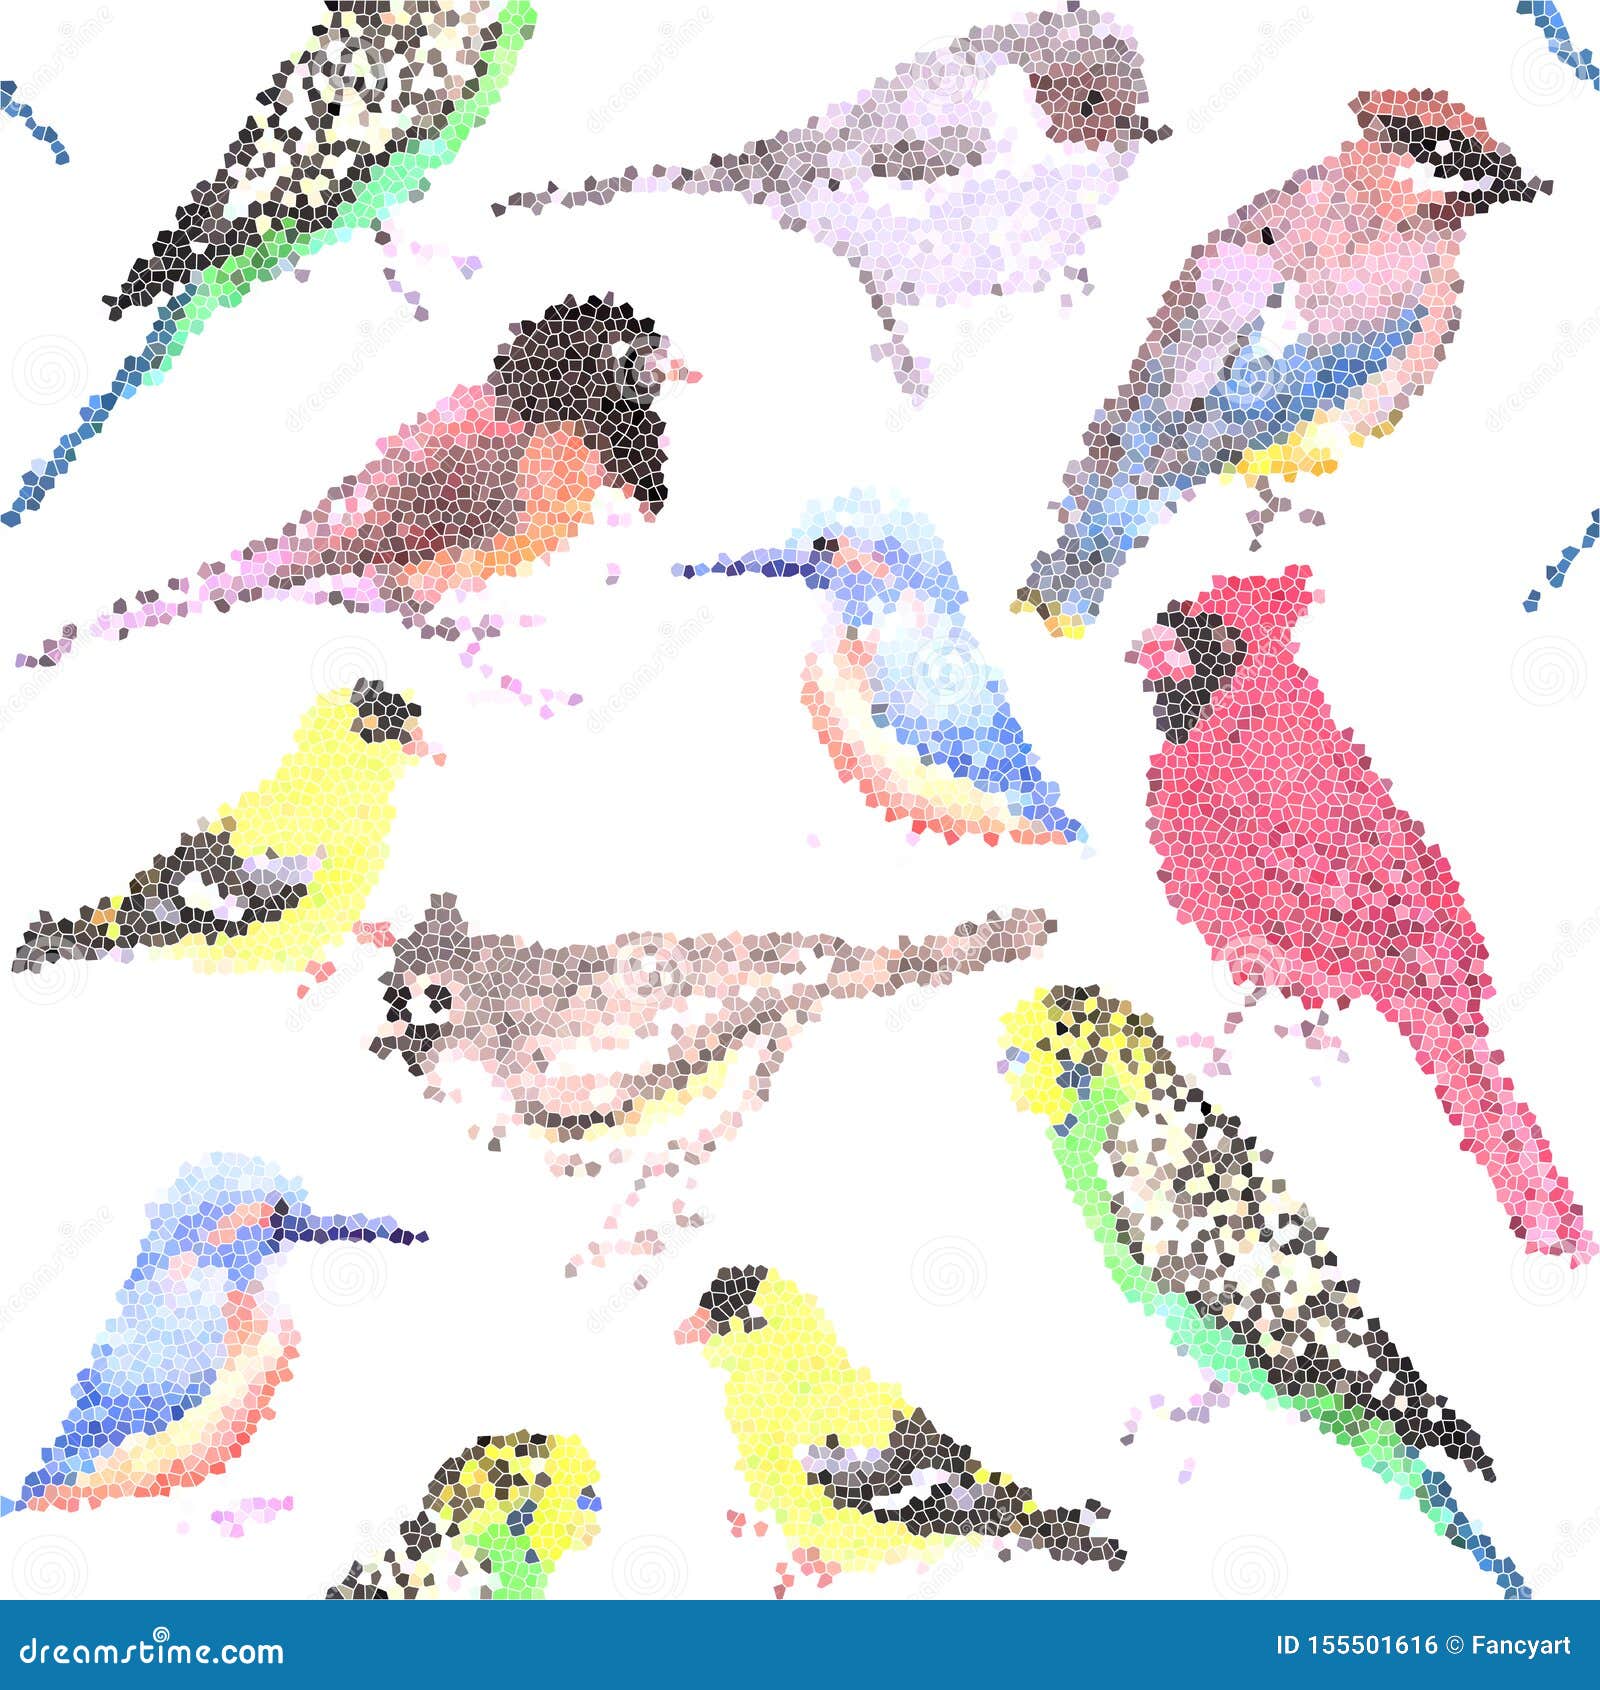 various birds stained glass art seamless background- budgie cardinal goldfinch titmouse kingfisher cedar waxwing juncos